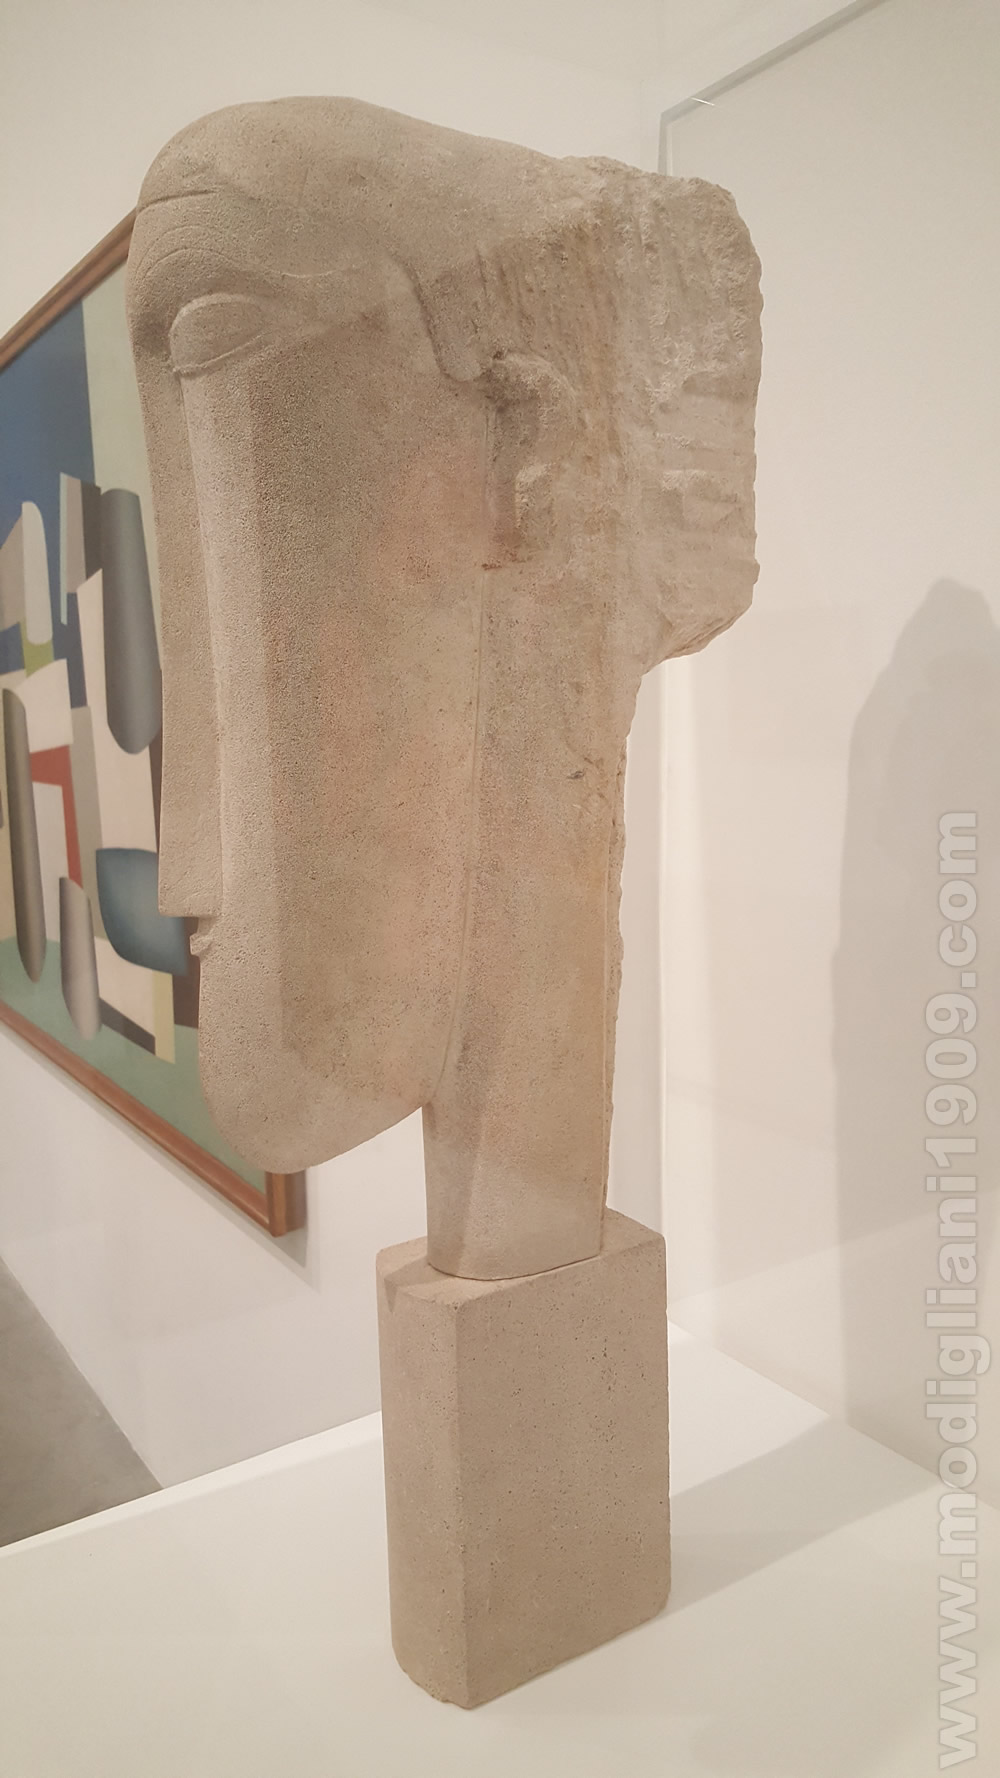 Head (left side), Amedeo Modigliani, 1911 - 1912, Limestone, TATE MODERN, LONDON